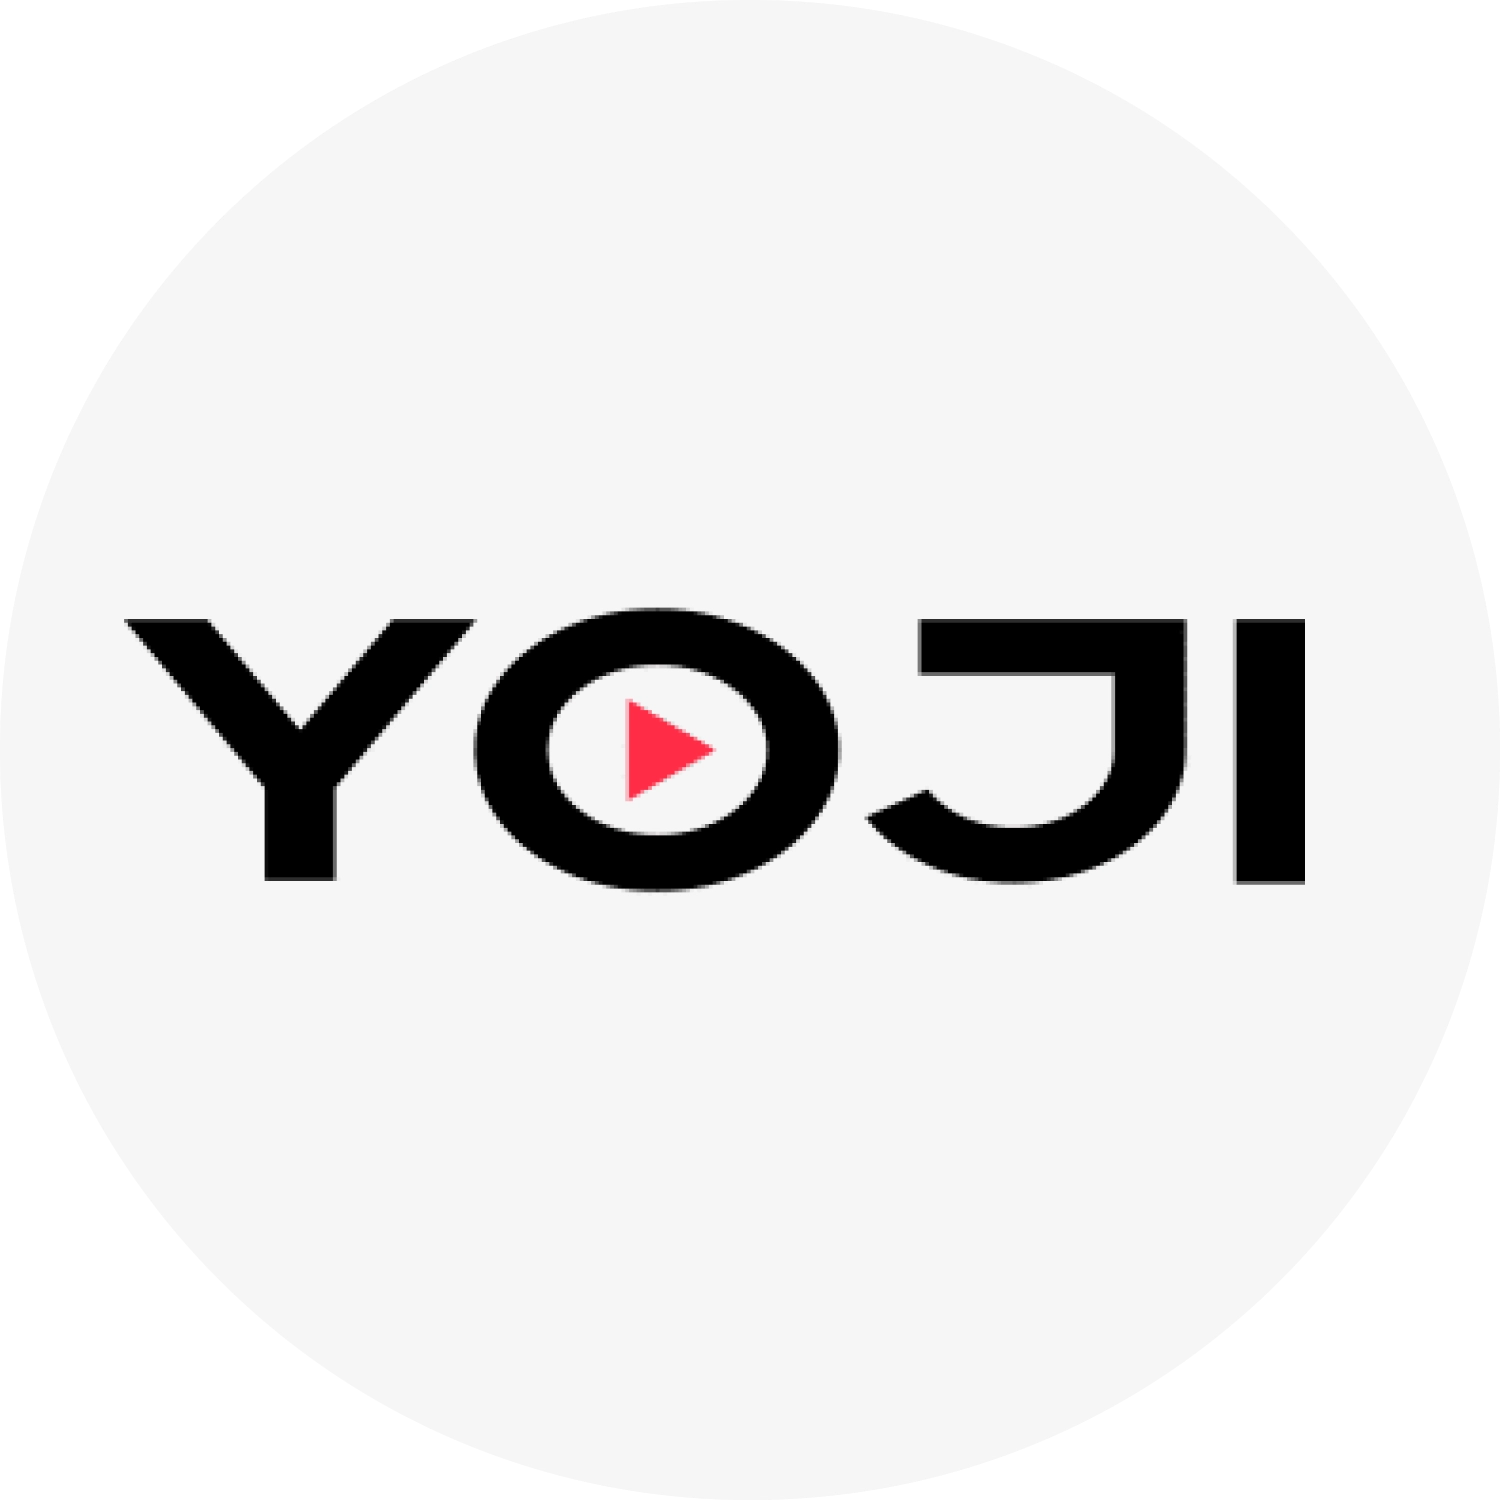 Yoji casino logo rotund gri 1500x1500